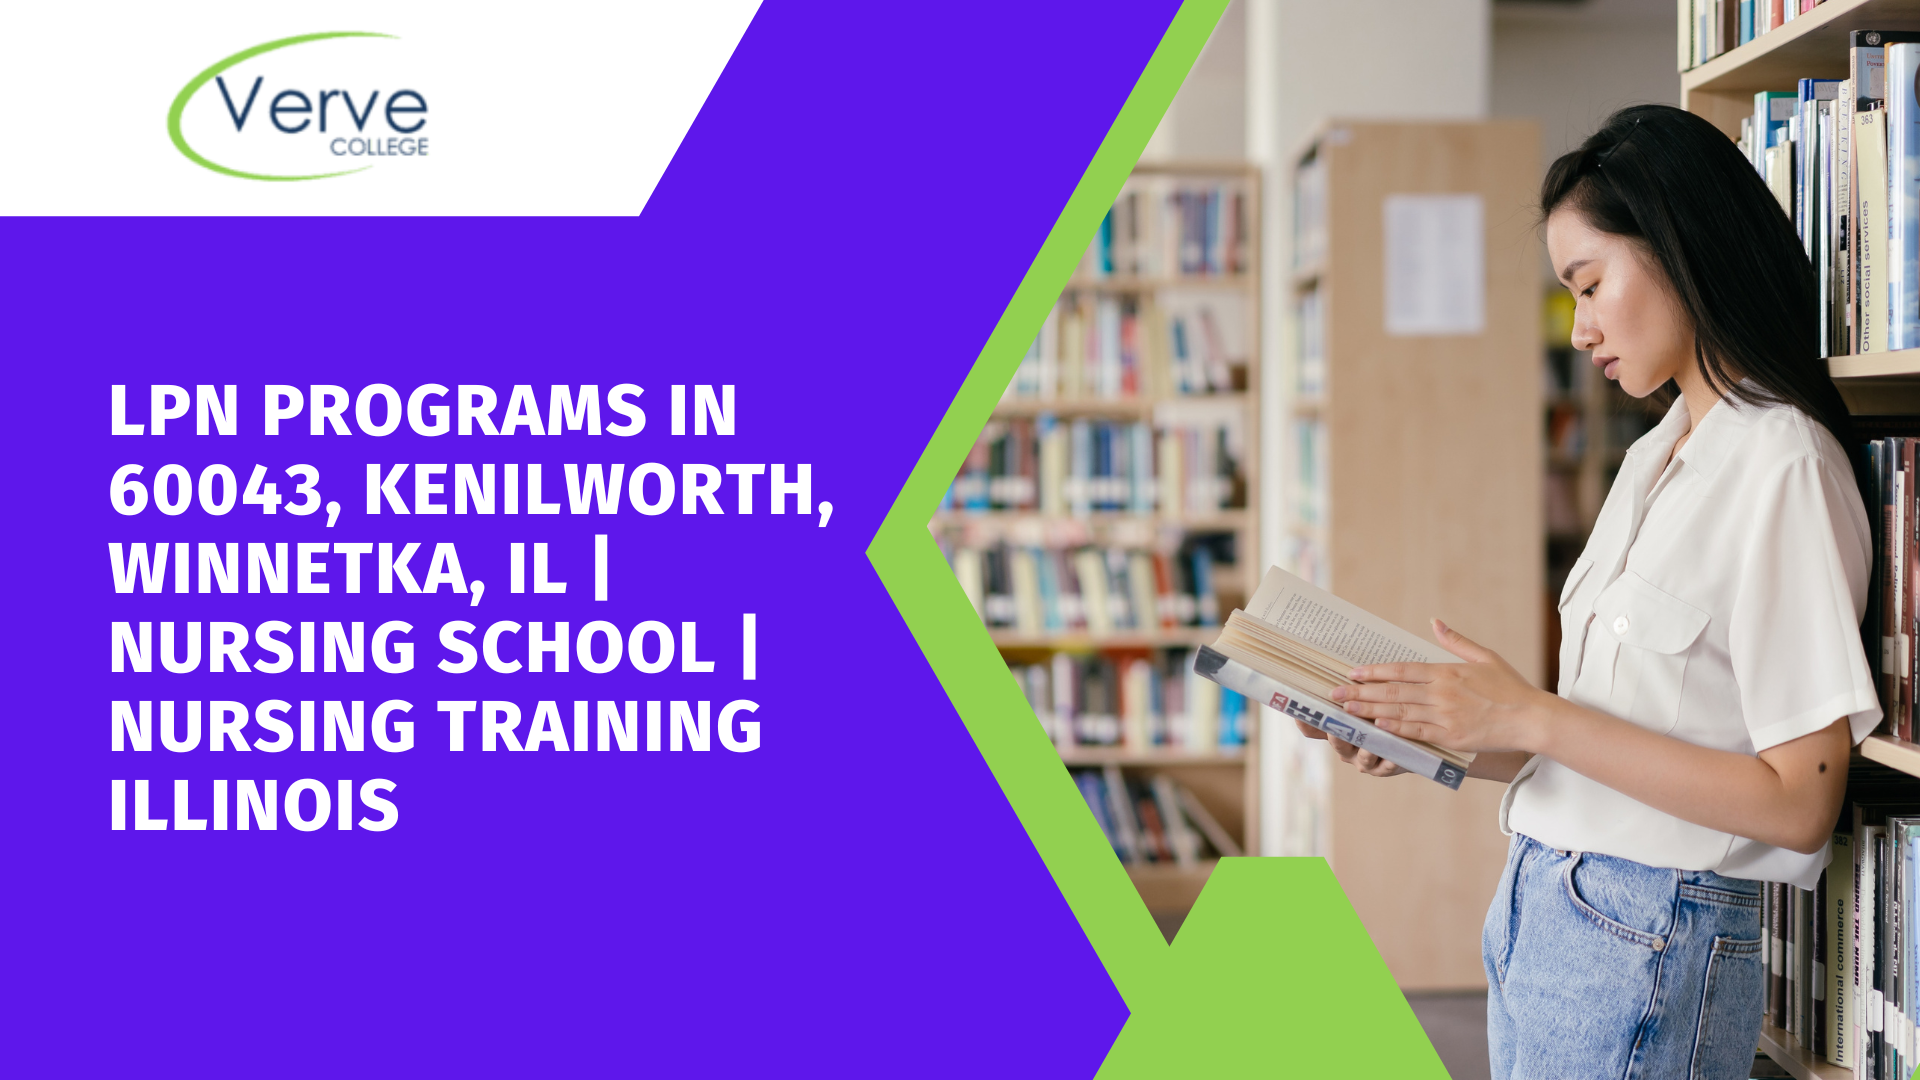 LPN Programs in 60043, Kenilworth, Winnetka, IL | Nursing School | Nursing Training Illinois